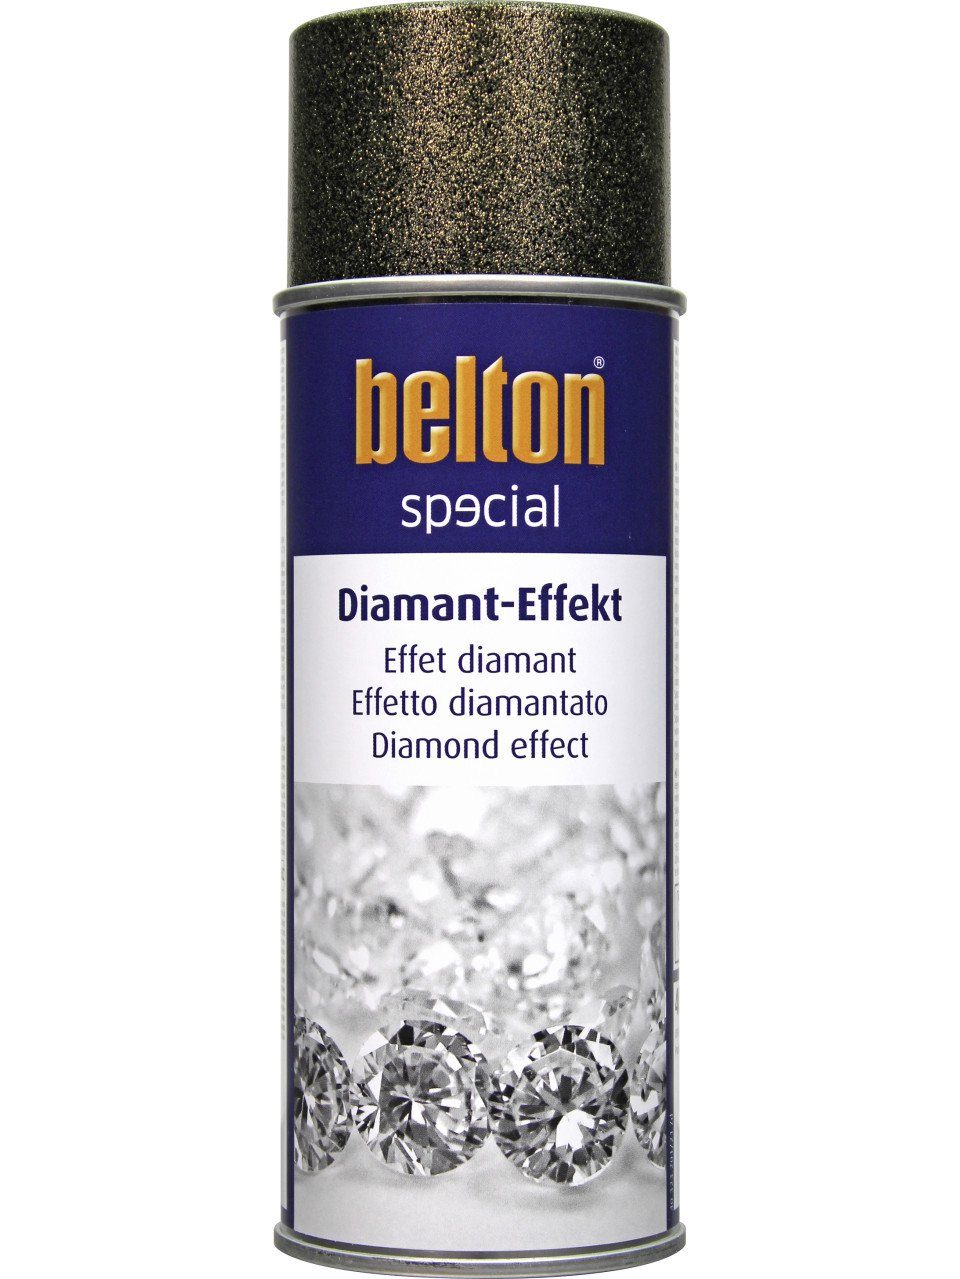 Belton ml special Diamant-Effekt gold Spray belton 400 Lack